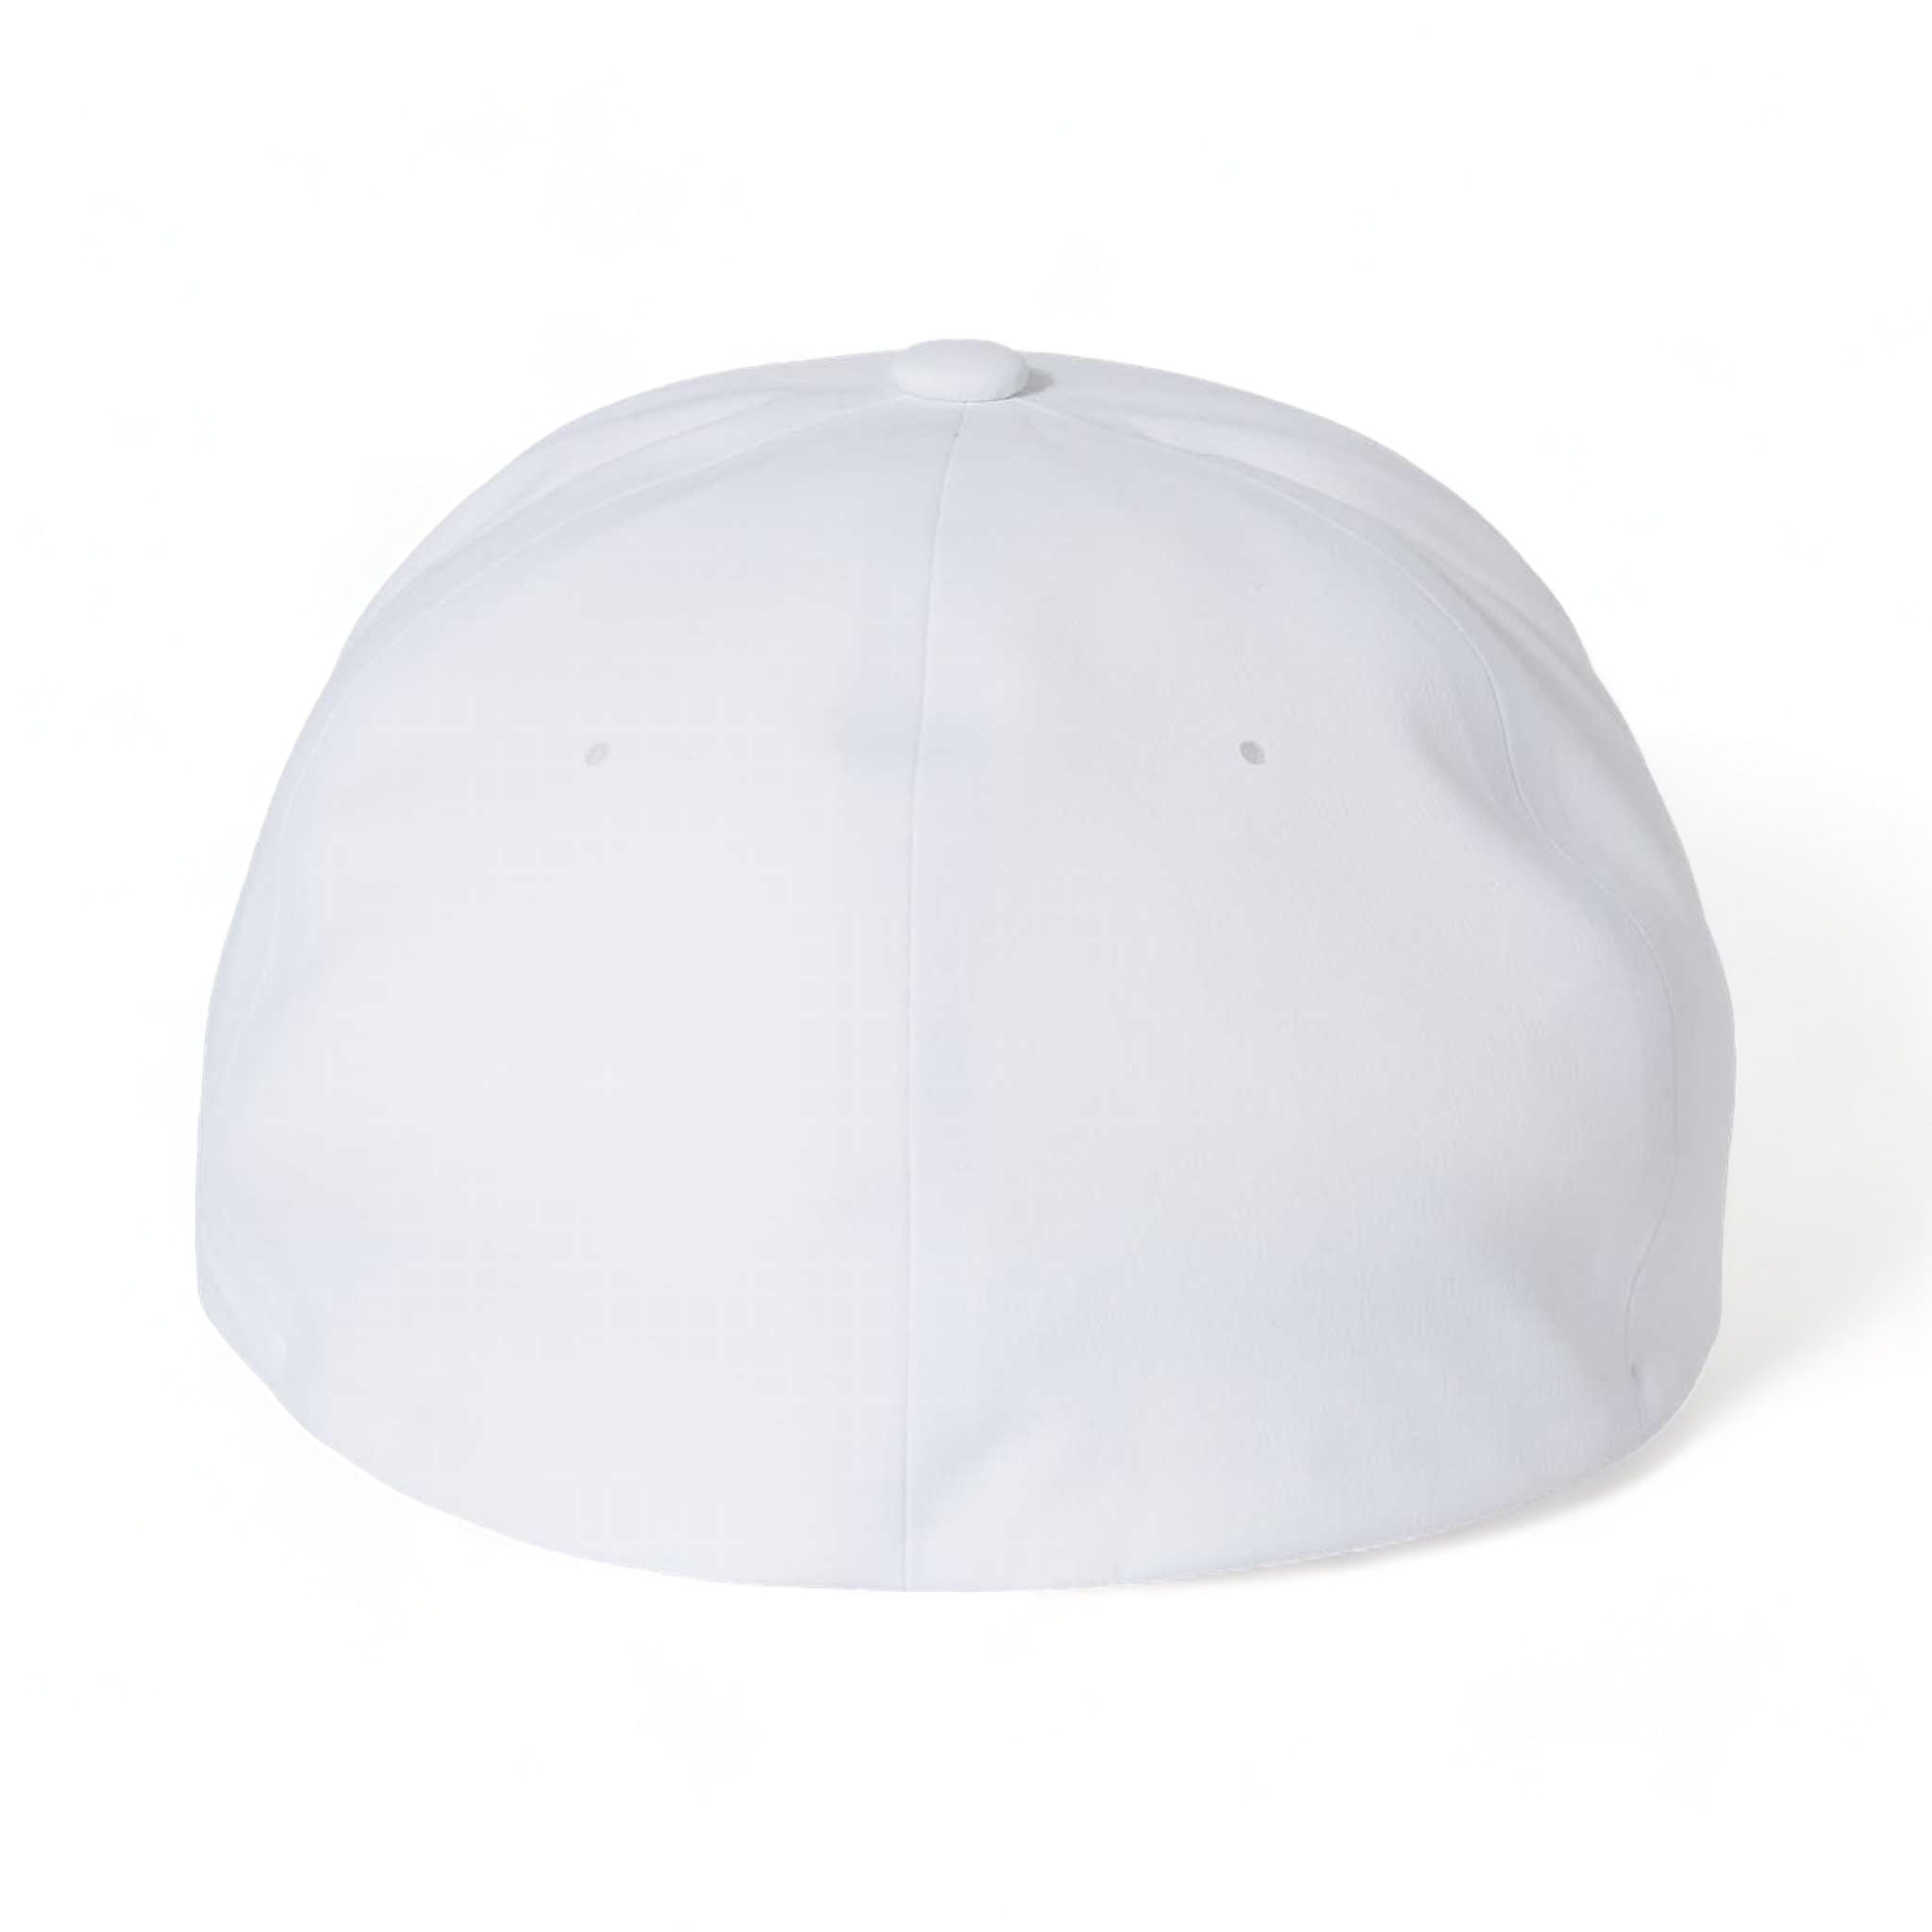 Back view of Flexfit 180 custom hat in white